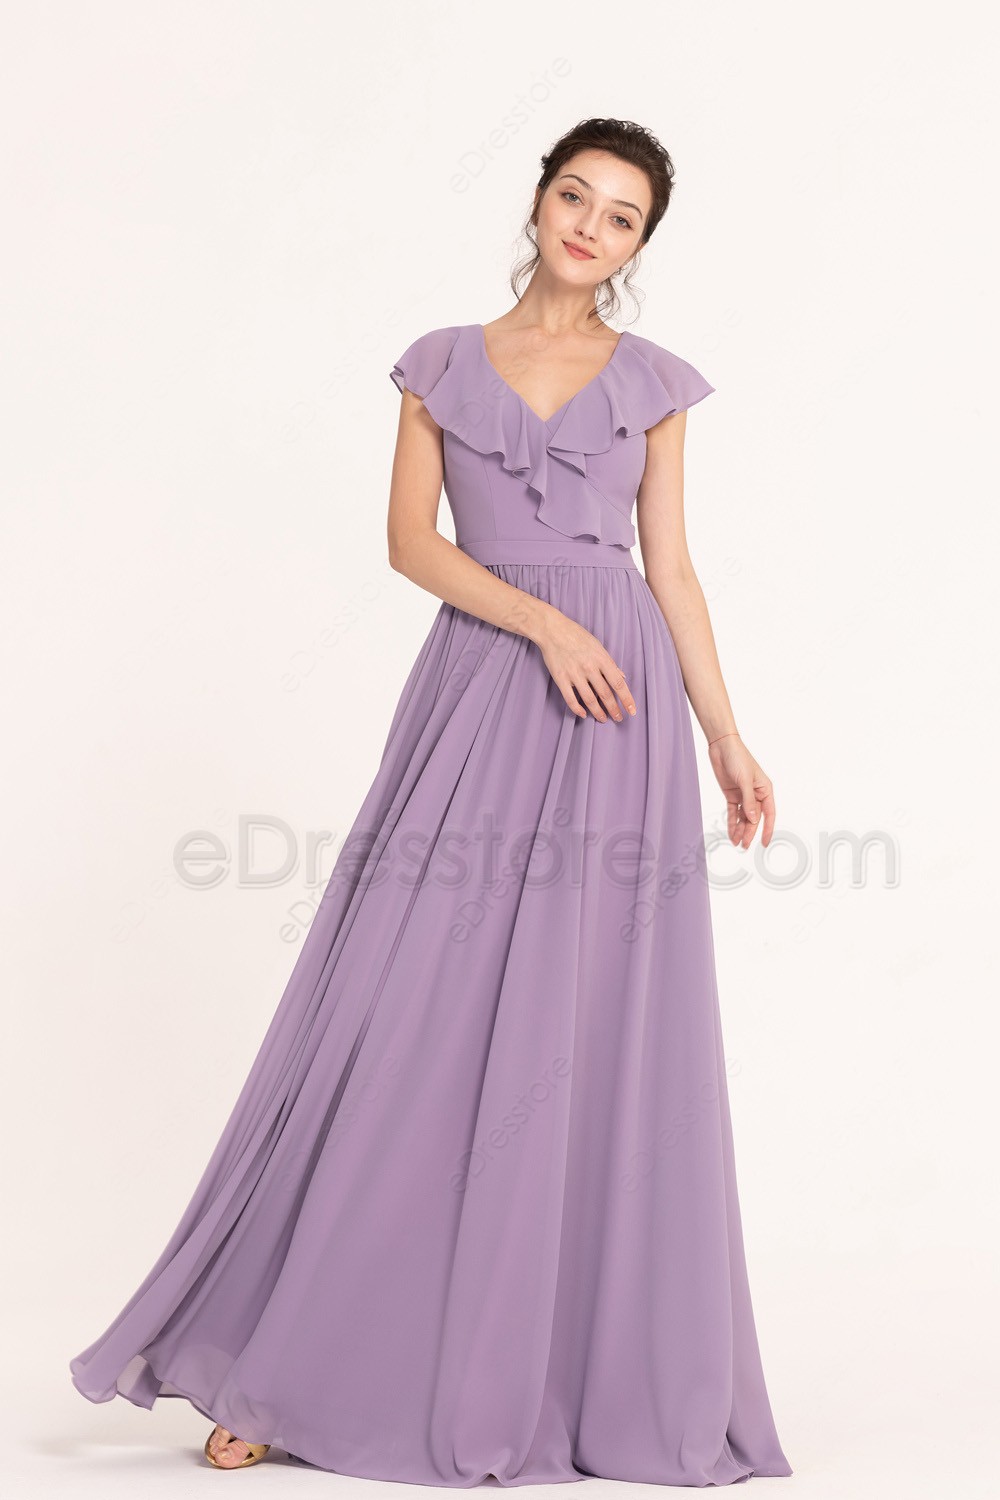 wisteria bridesmaid dresses cheap